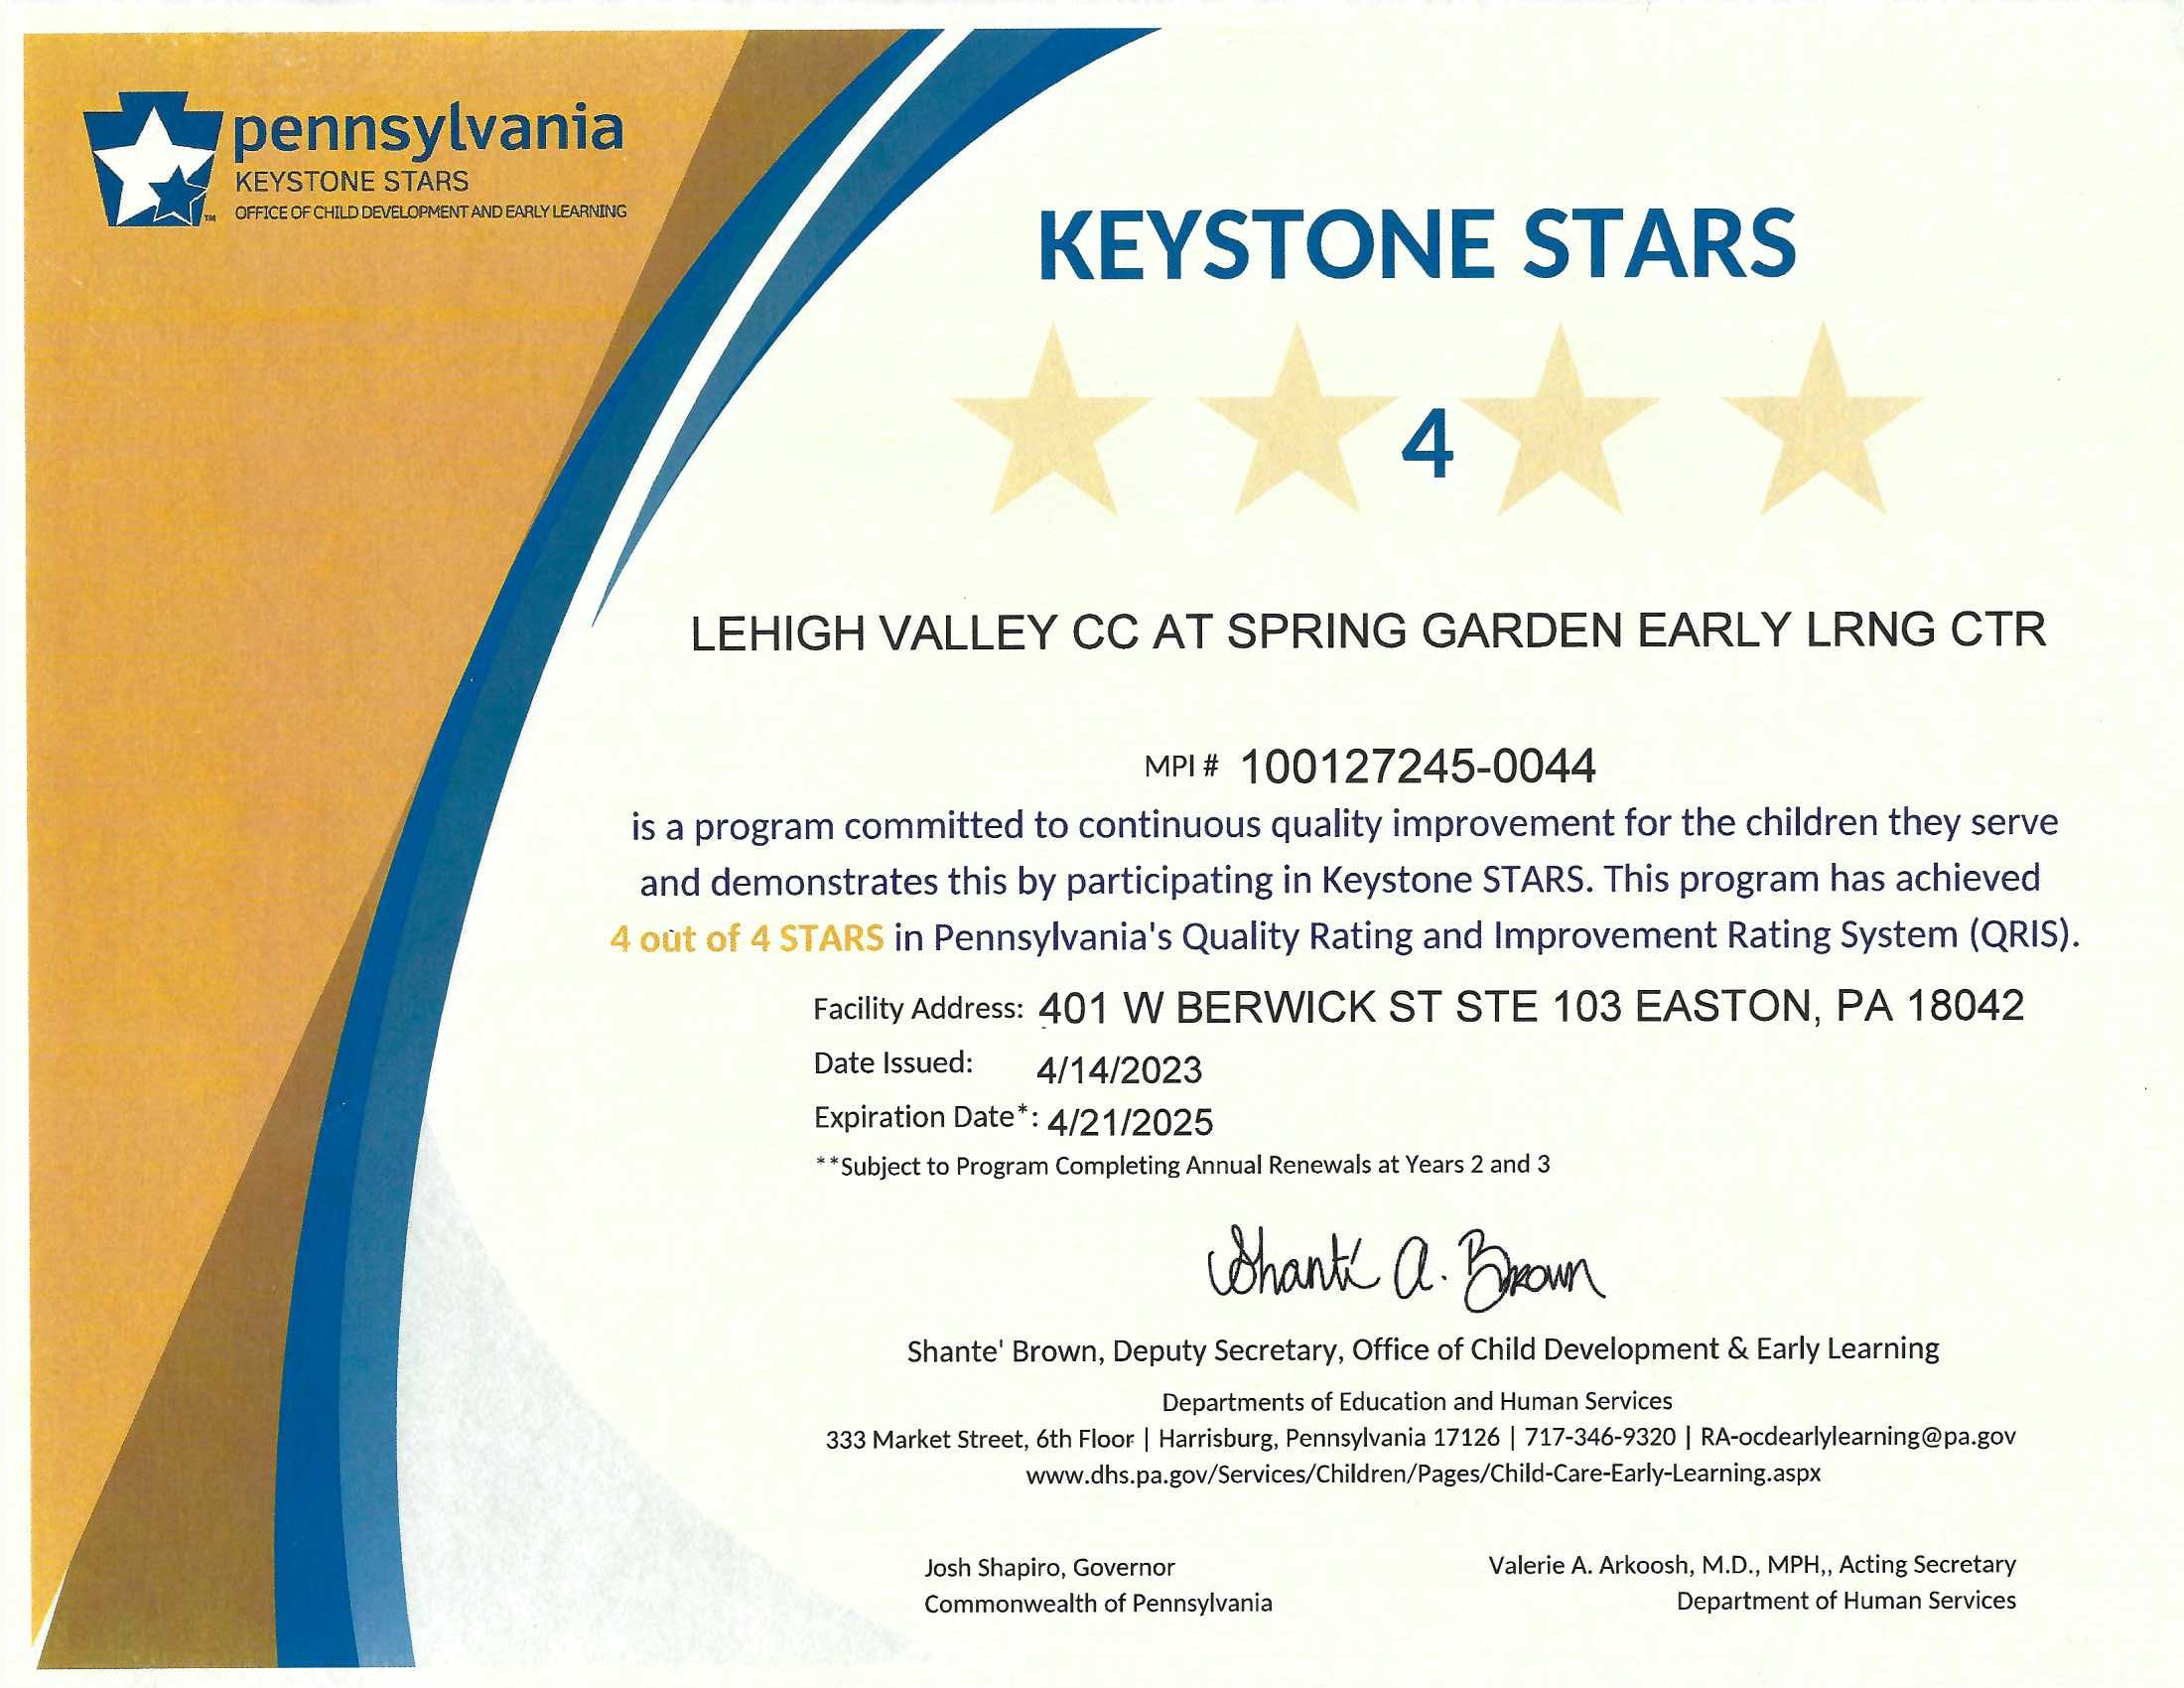 LVCC - Spring Garden Early Learning Center - Keystone Stars Ranking - Easton, PA